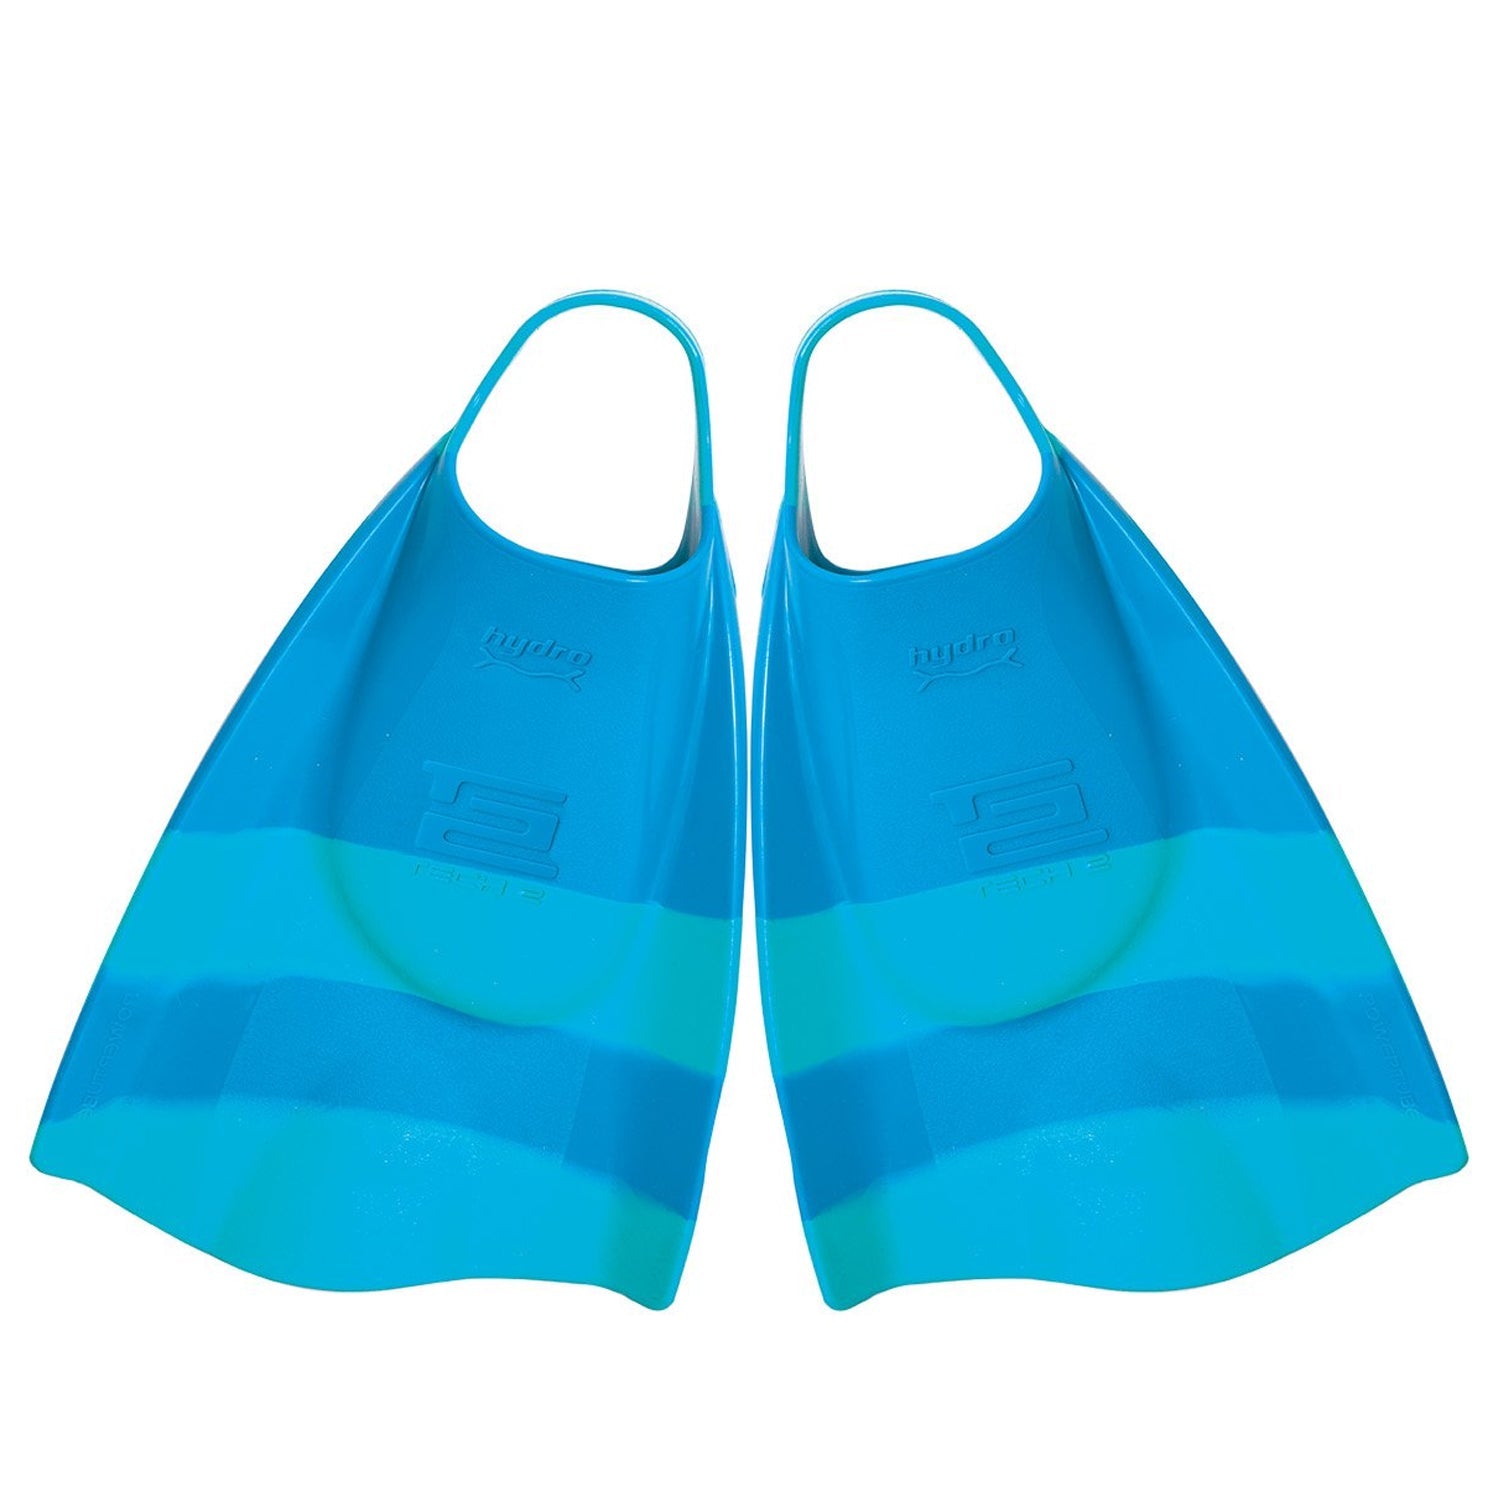 Hydro Tech 2 Soft Swim/Bodyboard Fins - Sizes Vary - Urban Surf